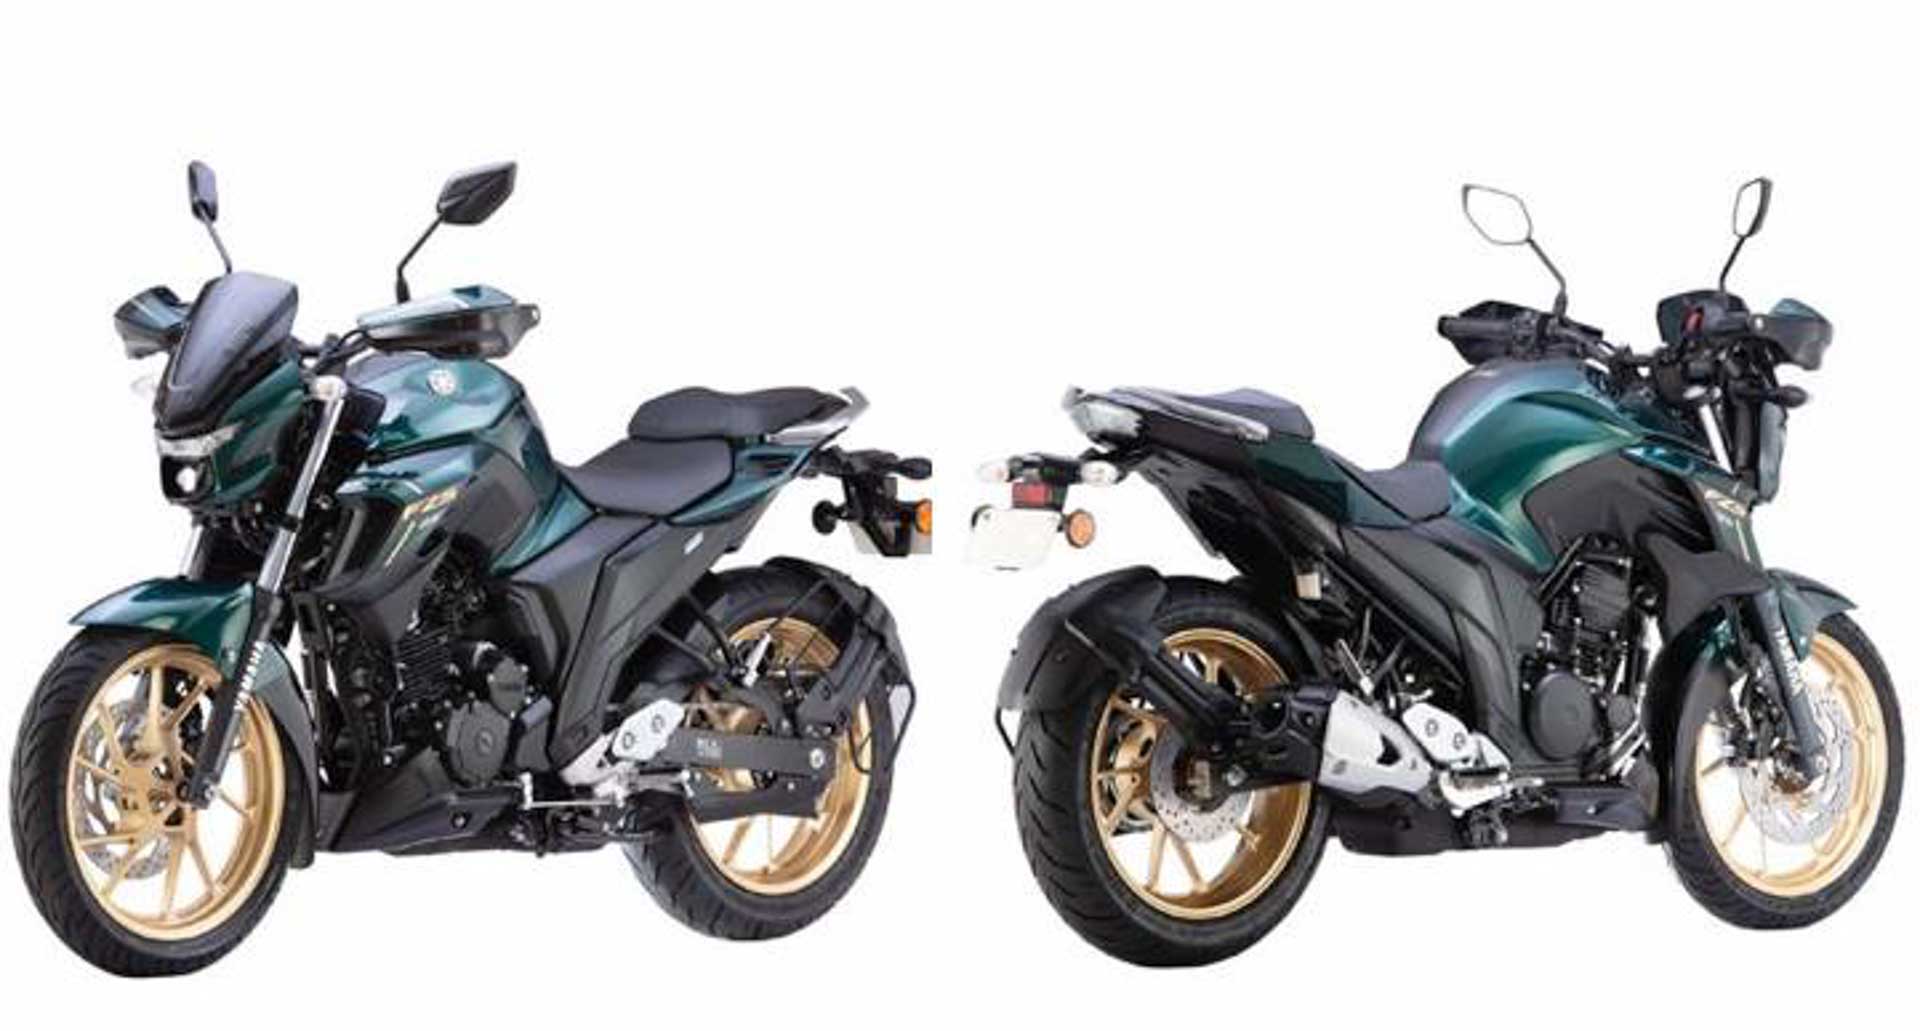 Yamaha FZ 25 & FZS 25 BS6 Motorcycles Listed On Website 